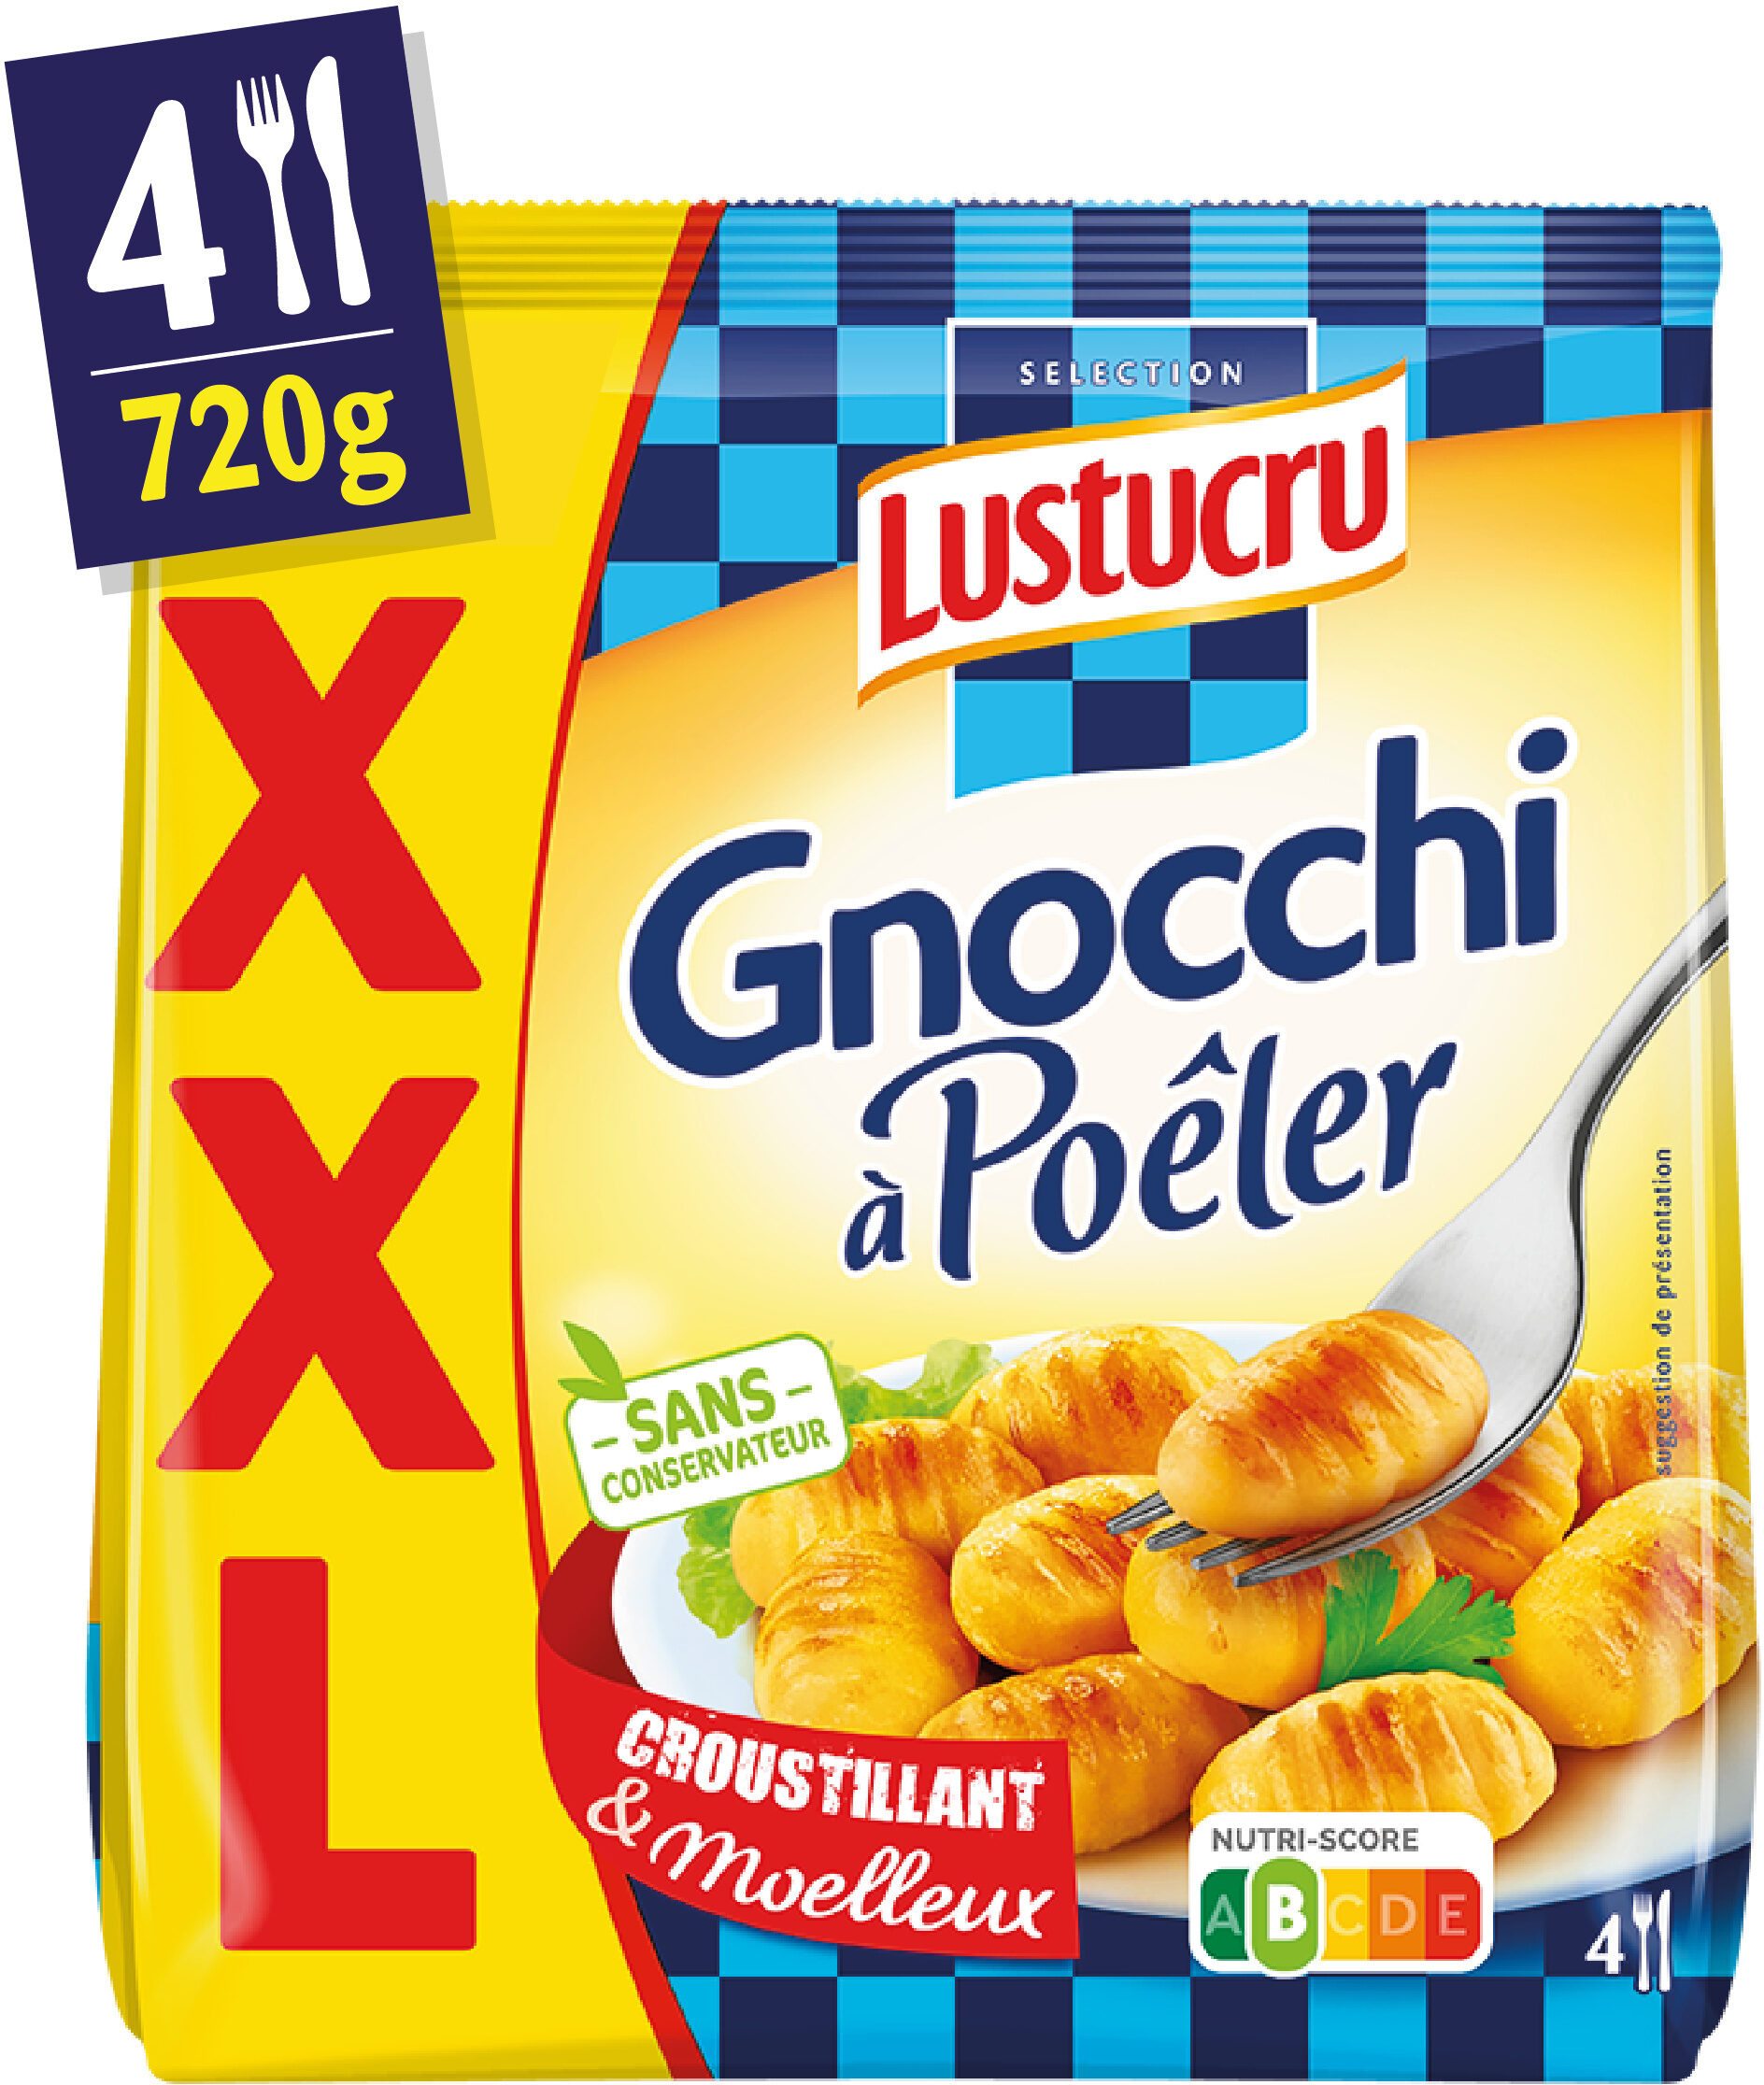 Lustucru gnocchi a poêler format xxl 720g - Produit